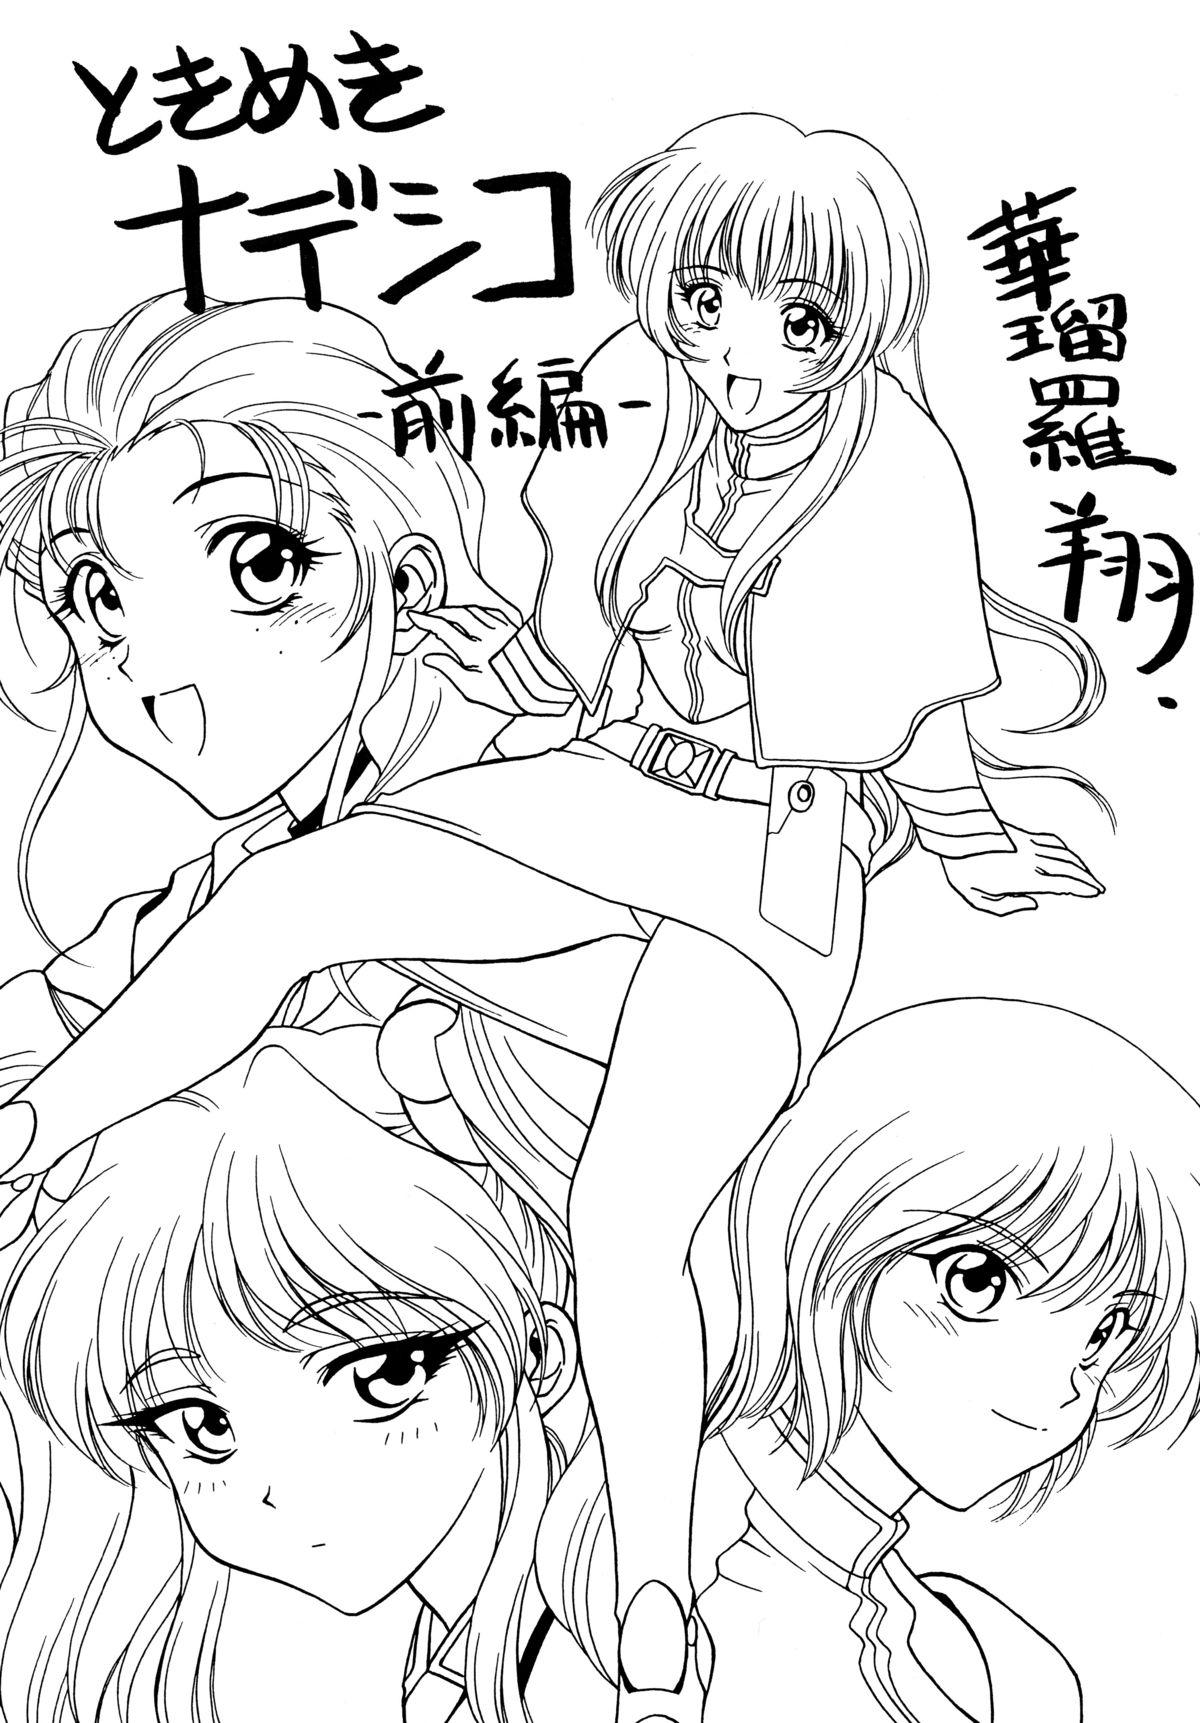 Stepsis LOVE² BREATH - Sakura taisen Martian successor nadesico Tokimeki memorial Youre under arrest Pounded - Page 11